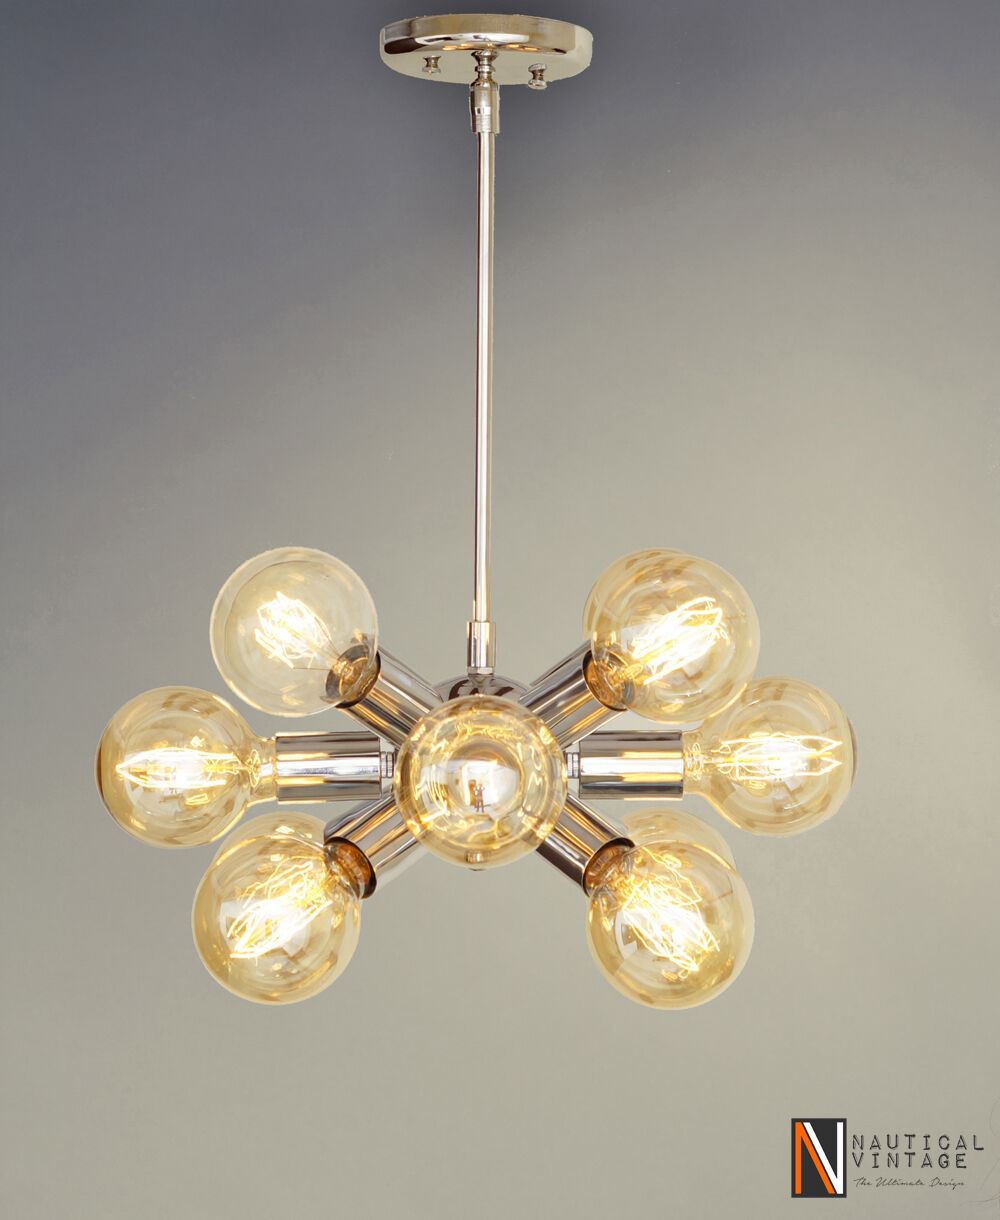 Industrial Vintage Chrome Brass Hanging Ceiling Sputnik Chandelier with 12 Arms - Doozie Light Studio